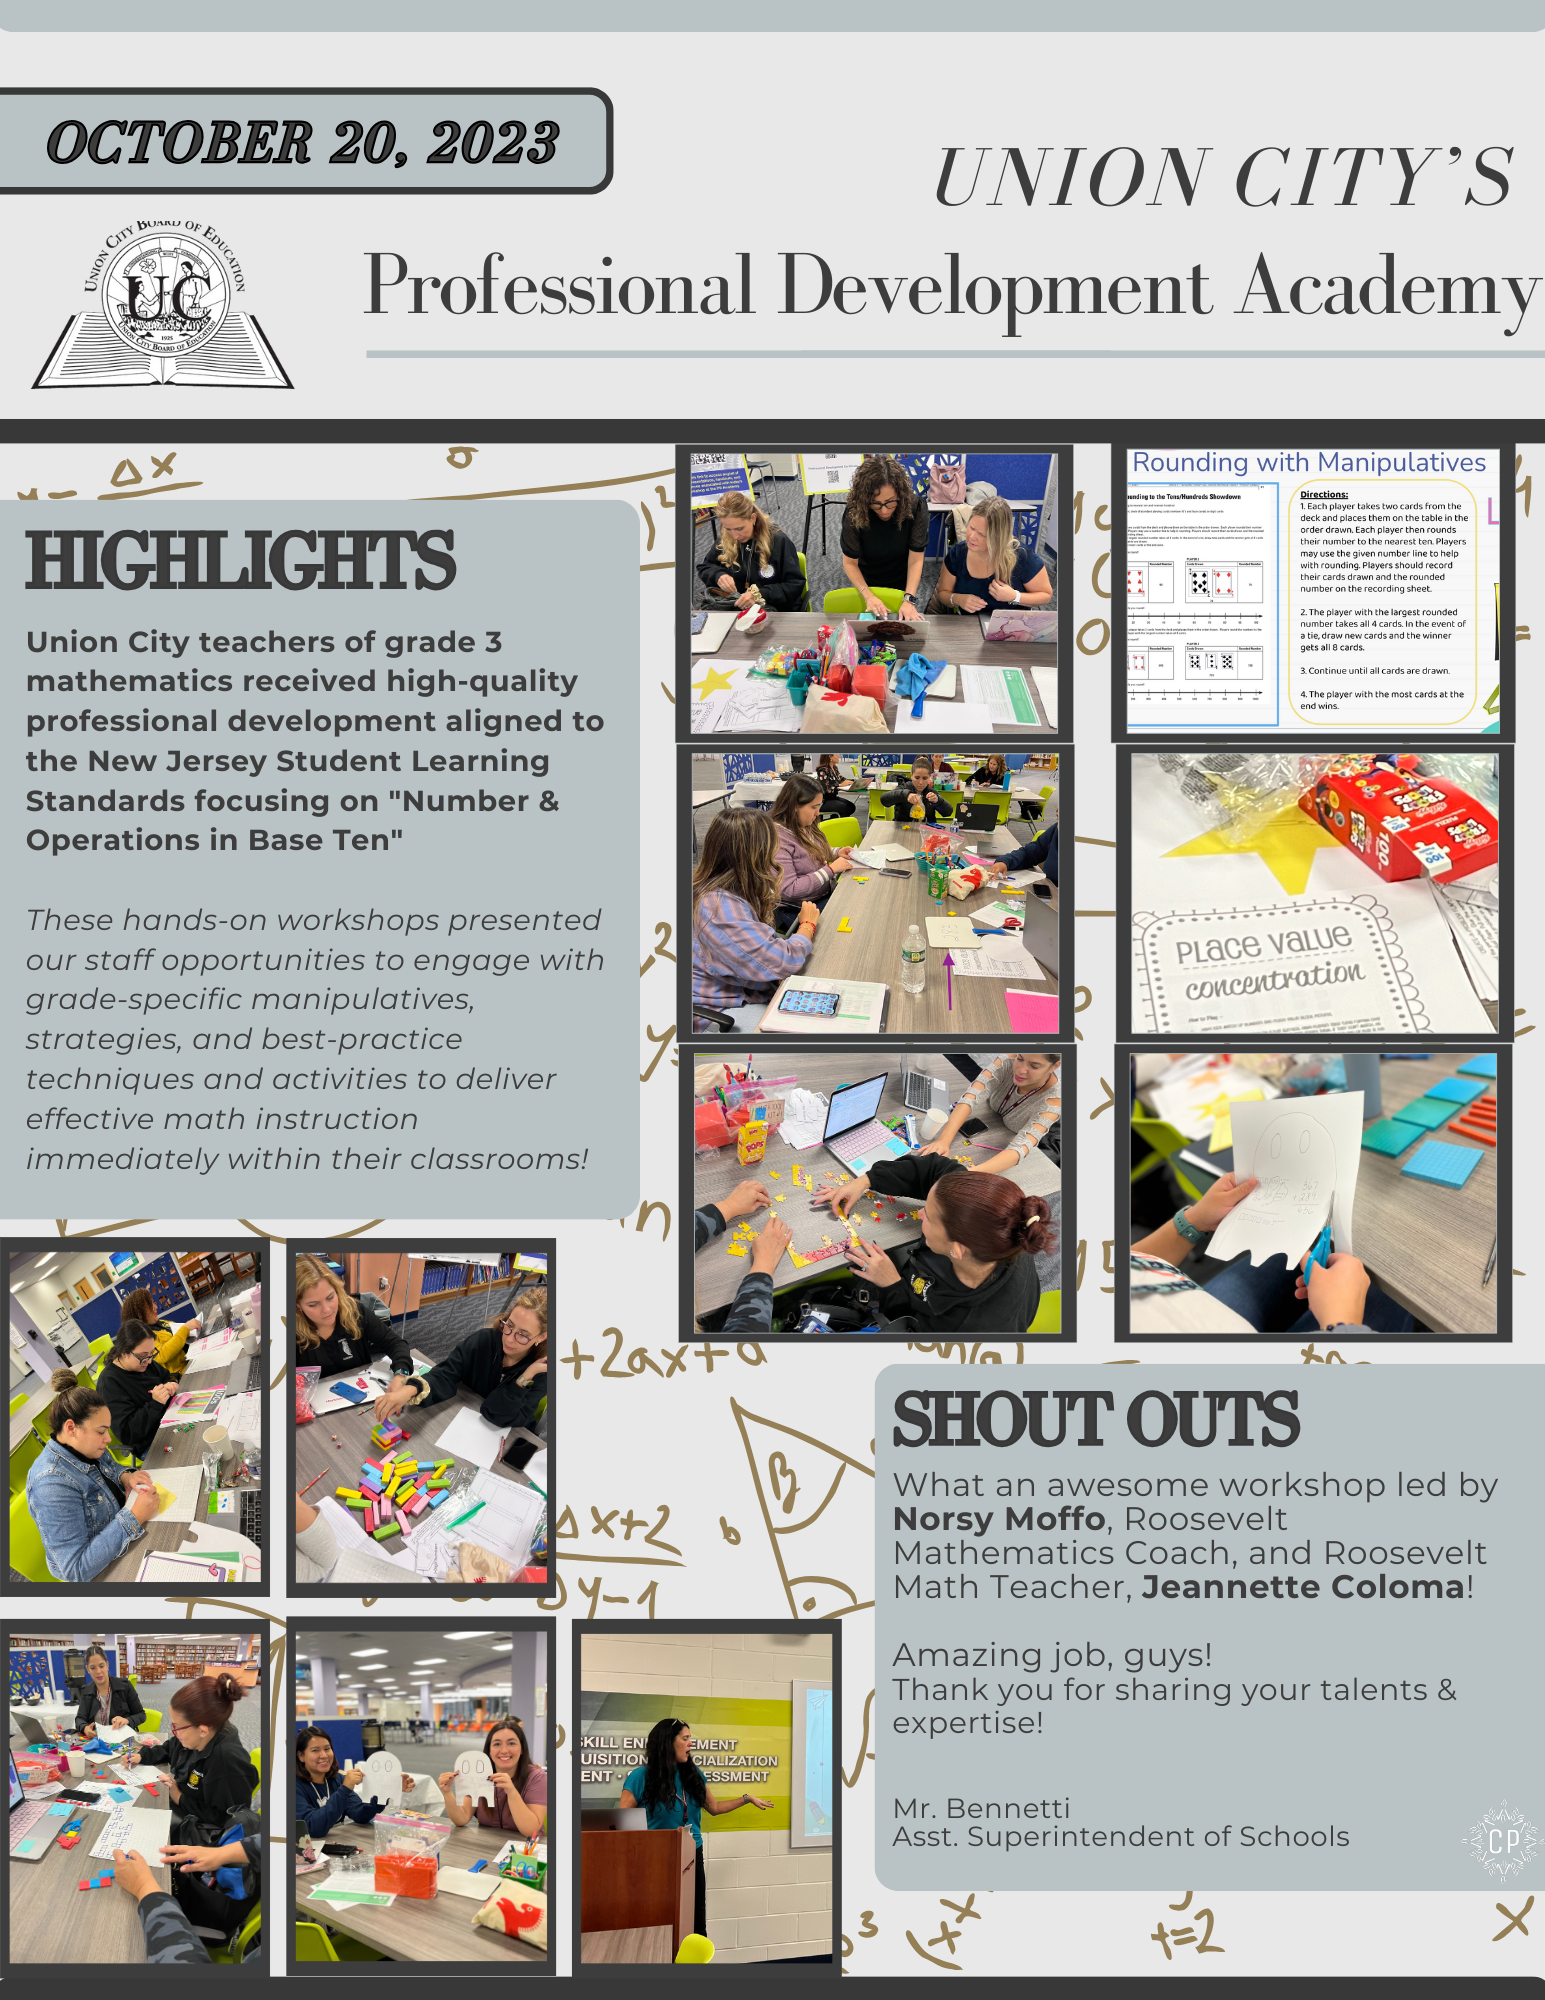 Union City Professional Development Academy